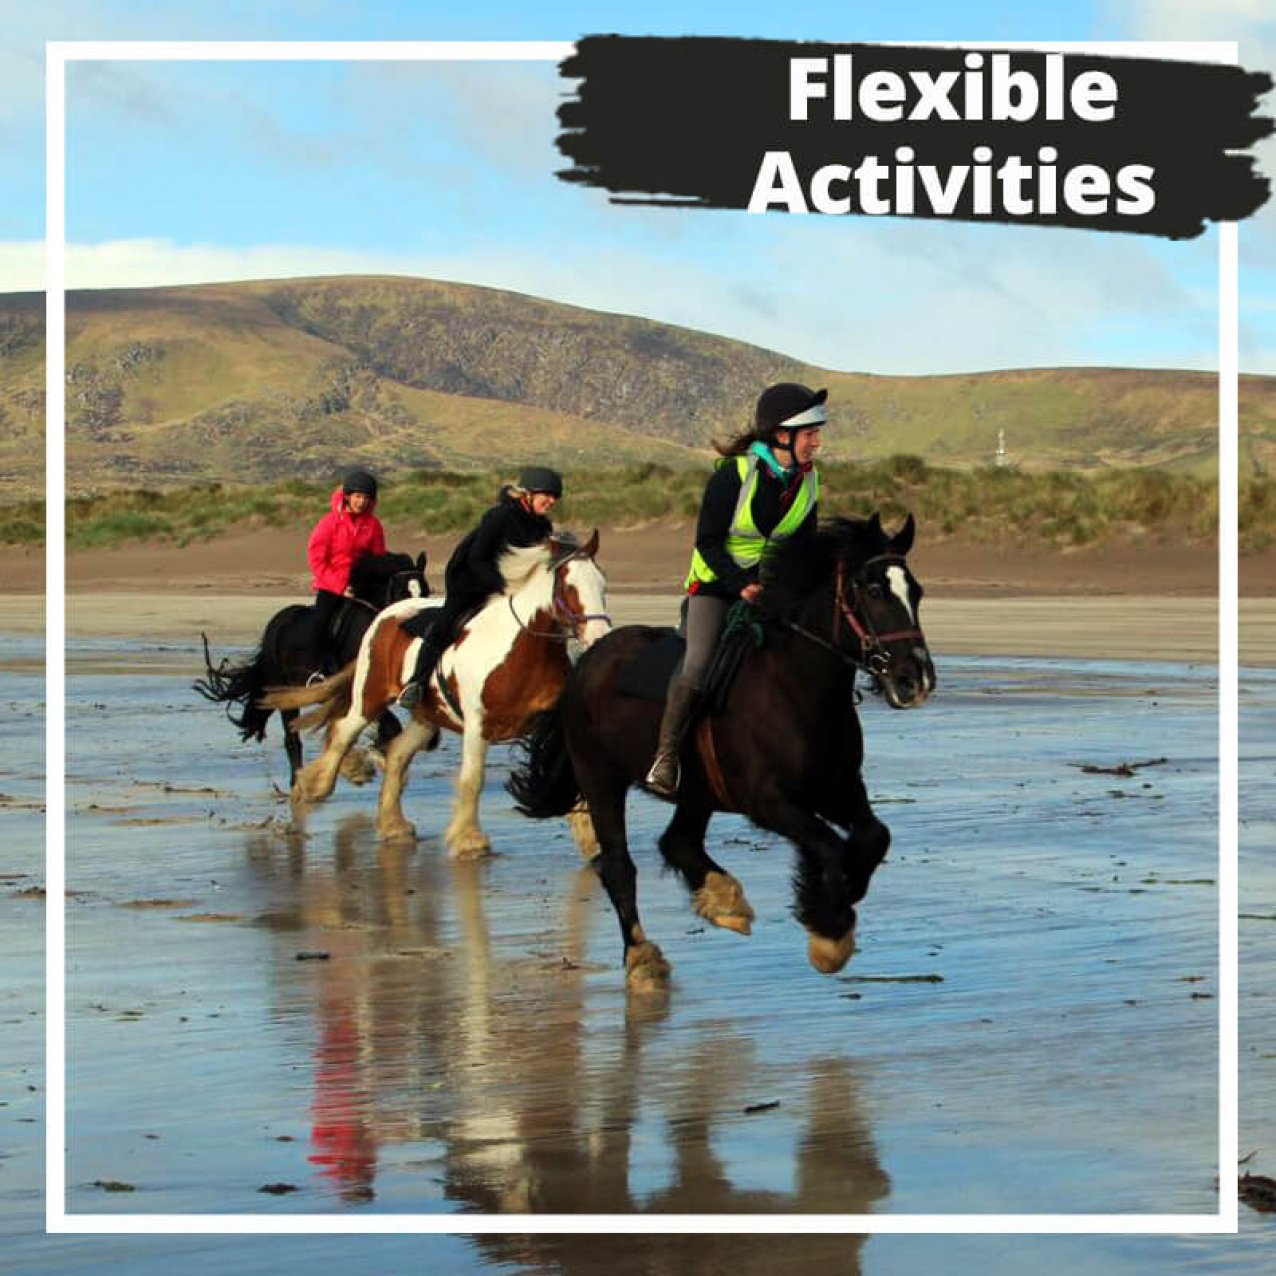 Flexible Activities horse riding on a beach in Ireland